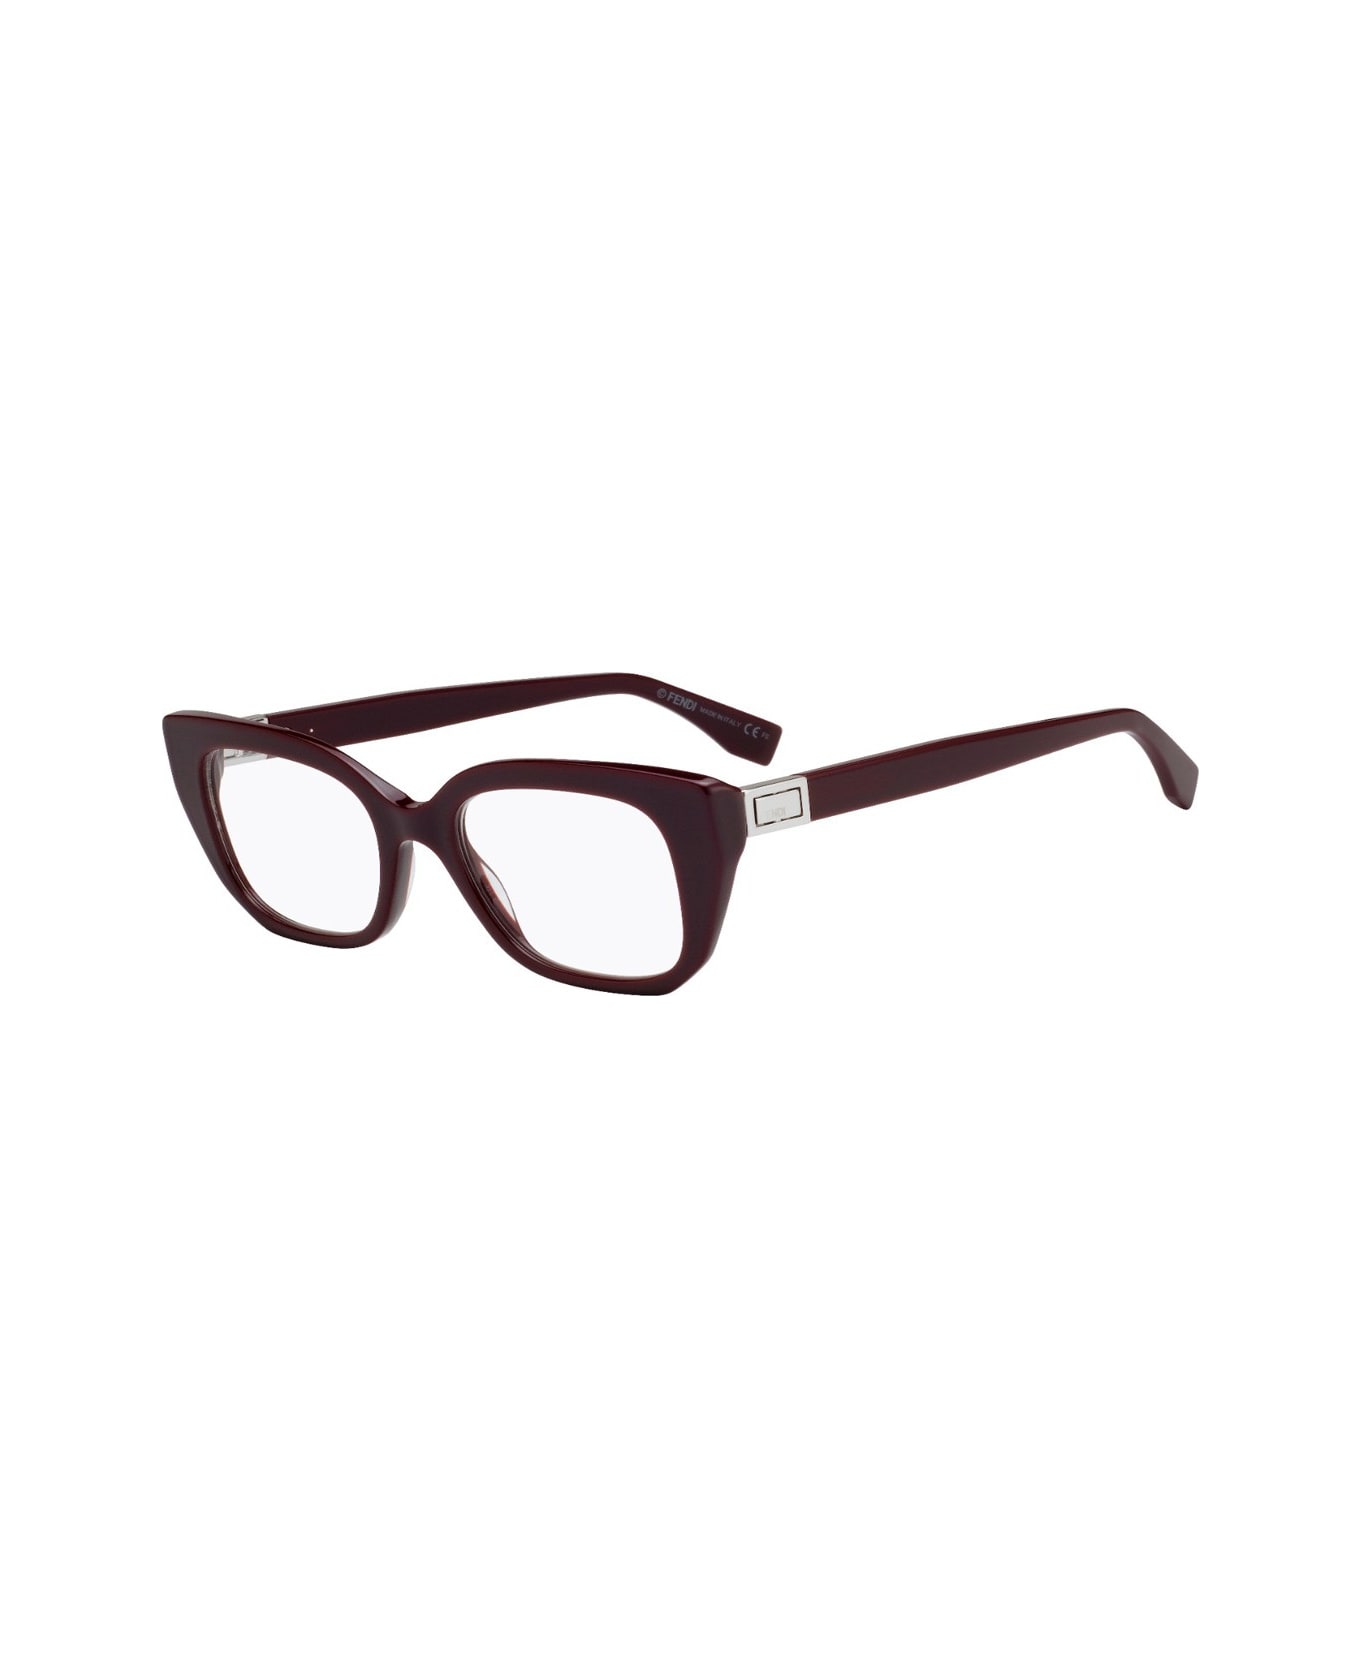 Fendi Eyewear Ff 0274 Glasses - Viola